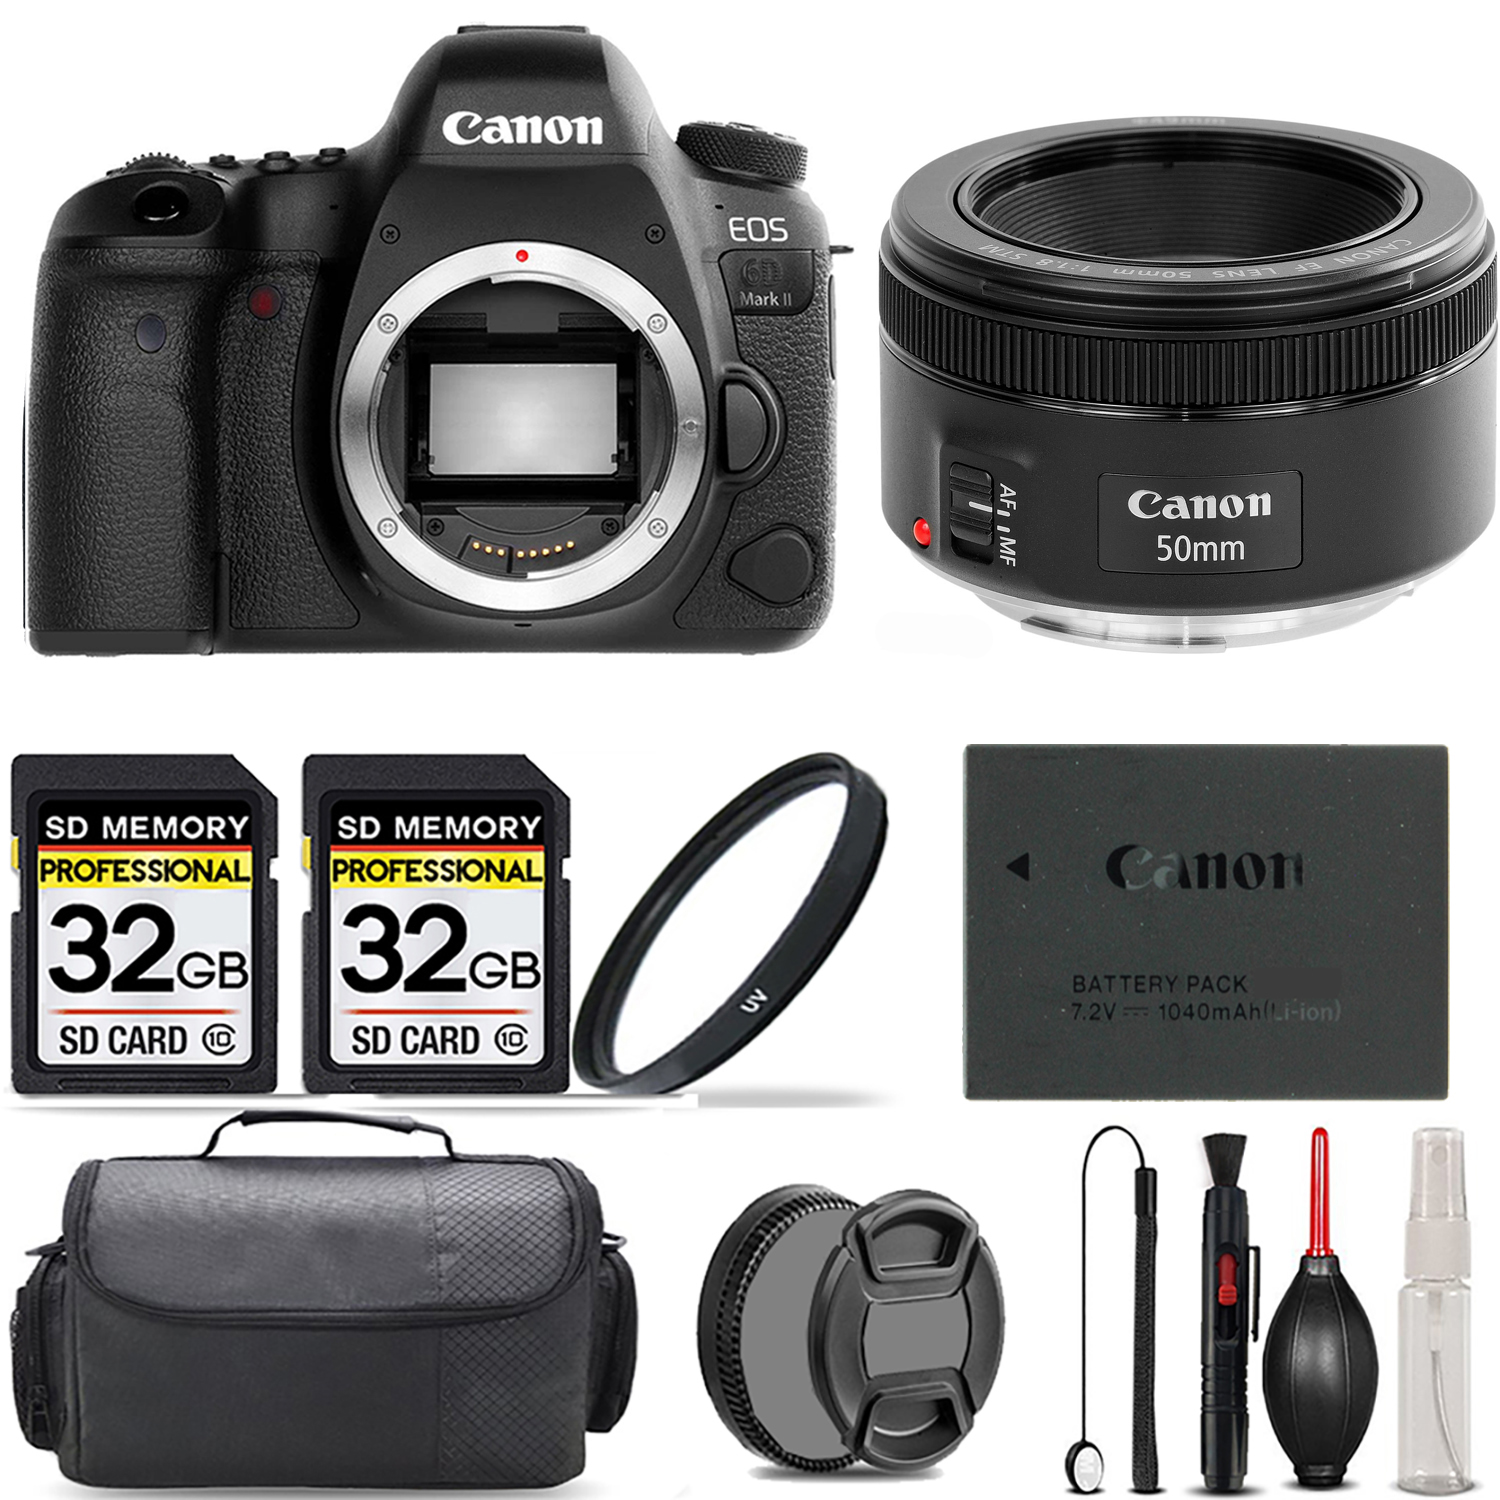 EOS 6D Mark II Camera + 50mm f/1.8 STM Lens + UV Filter + 64GB +Bag & More! *FREE SHIPPING*